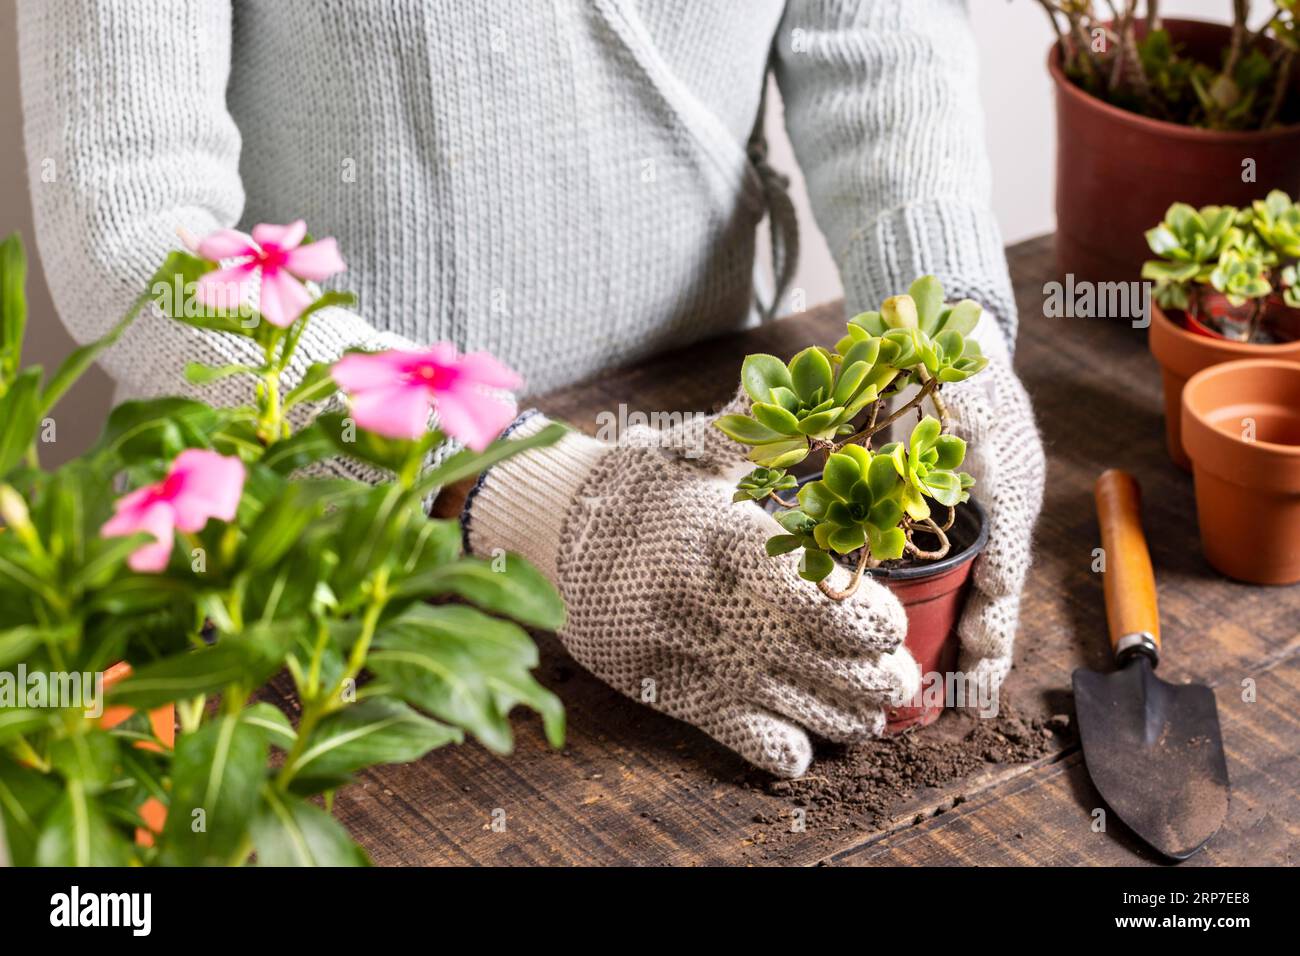 Planting flowers pot Stock Photo